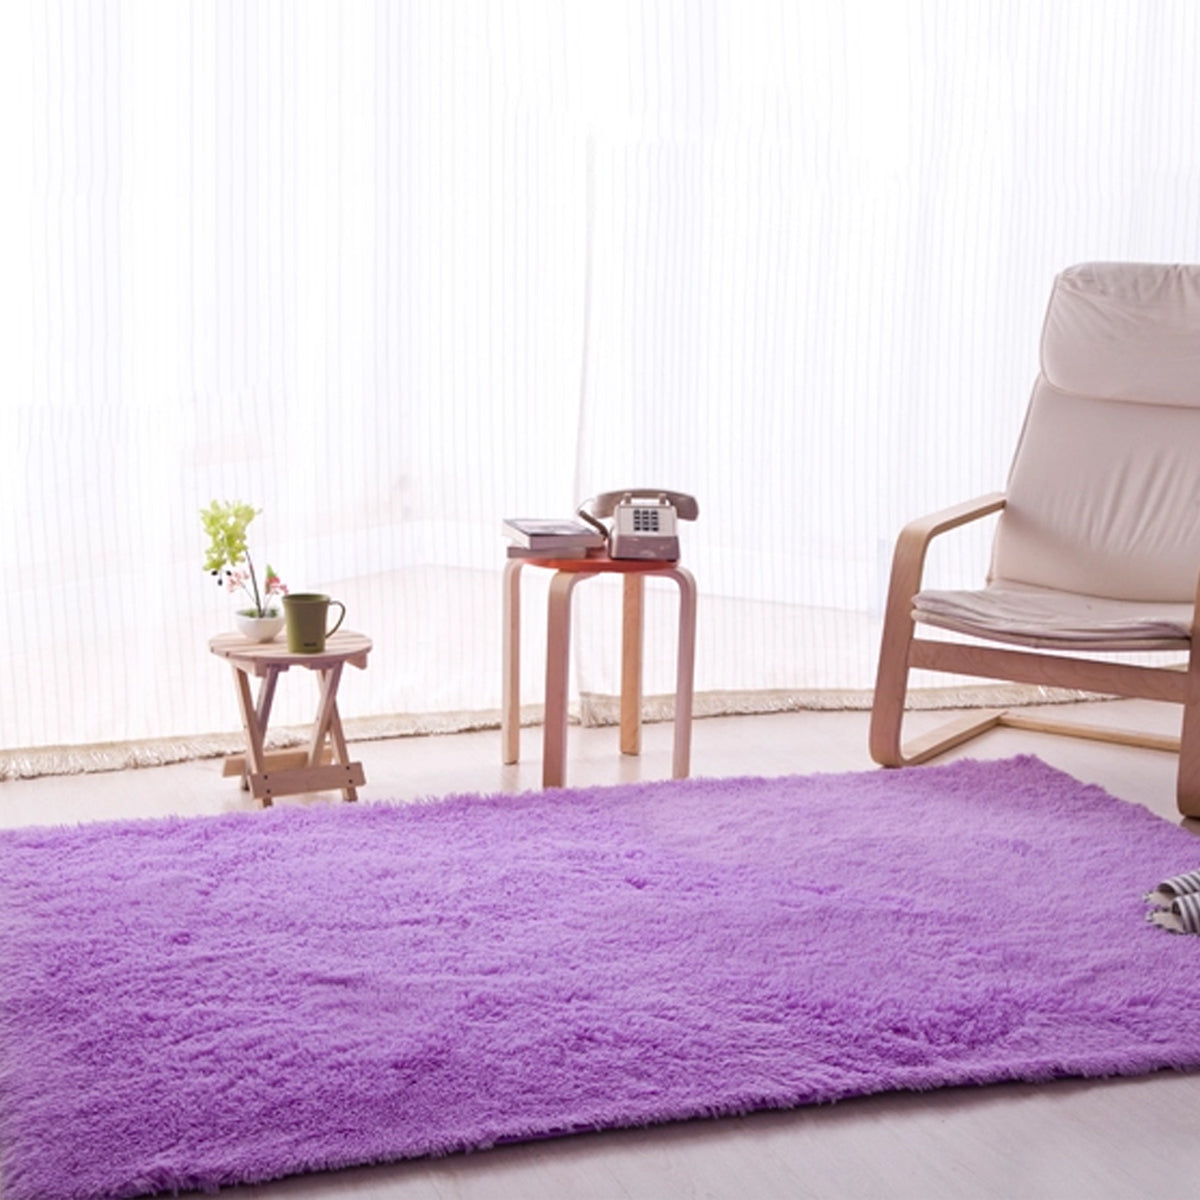 160x230cm Modern Soft Fluffy Floor Rug Anti-skid Shag Shaggy Area Rug Home Bedroom Dining Room Carpet Child Play Mat Yoga Mat